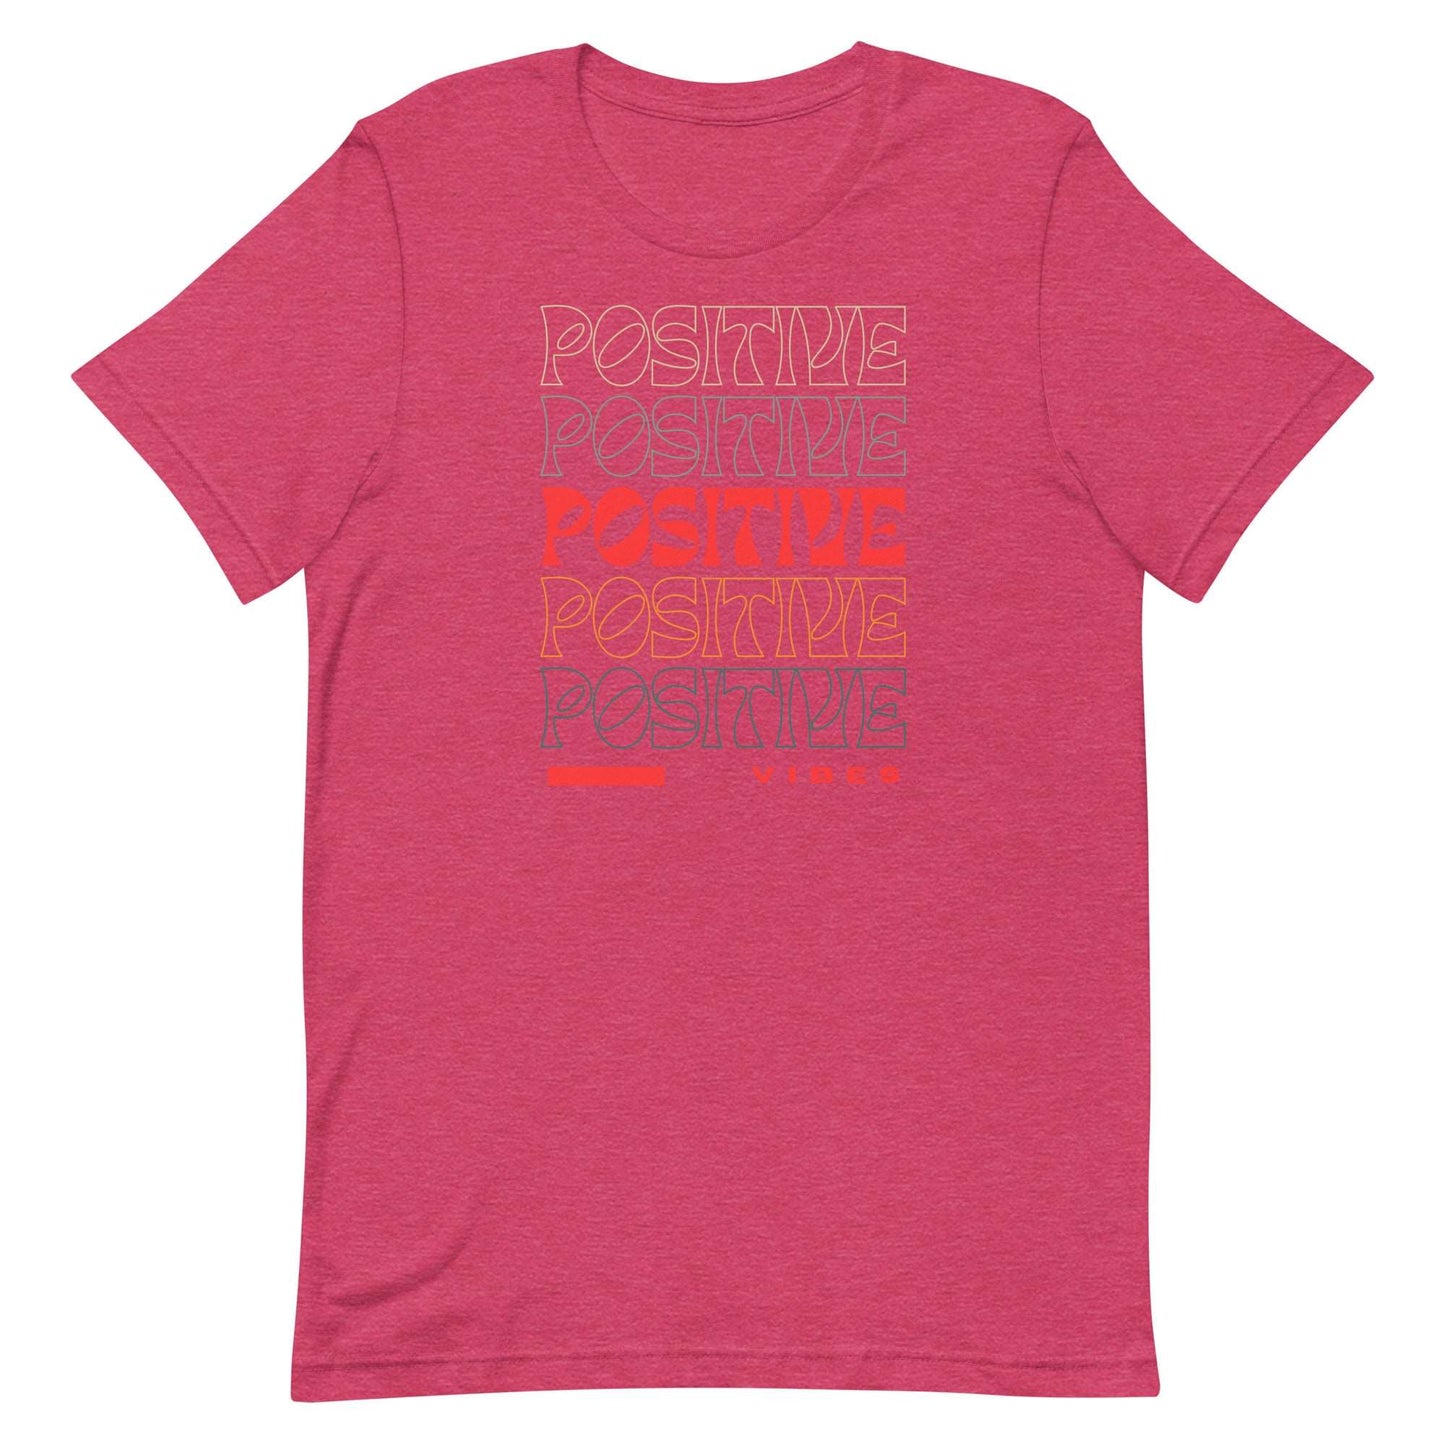 Positive Vibes. T-shirt